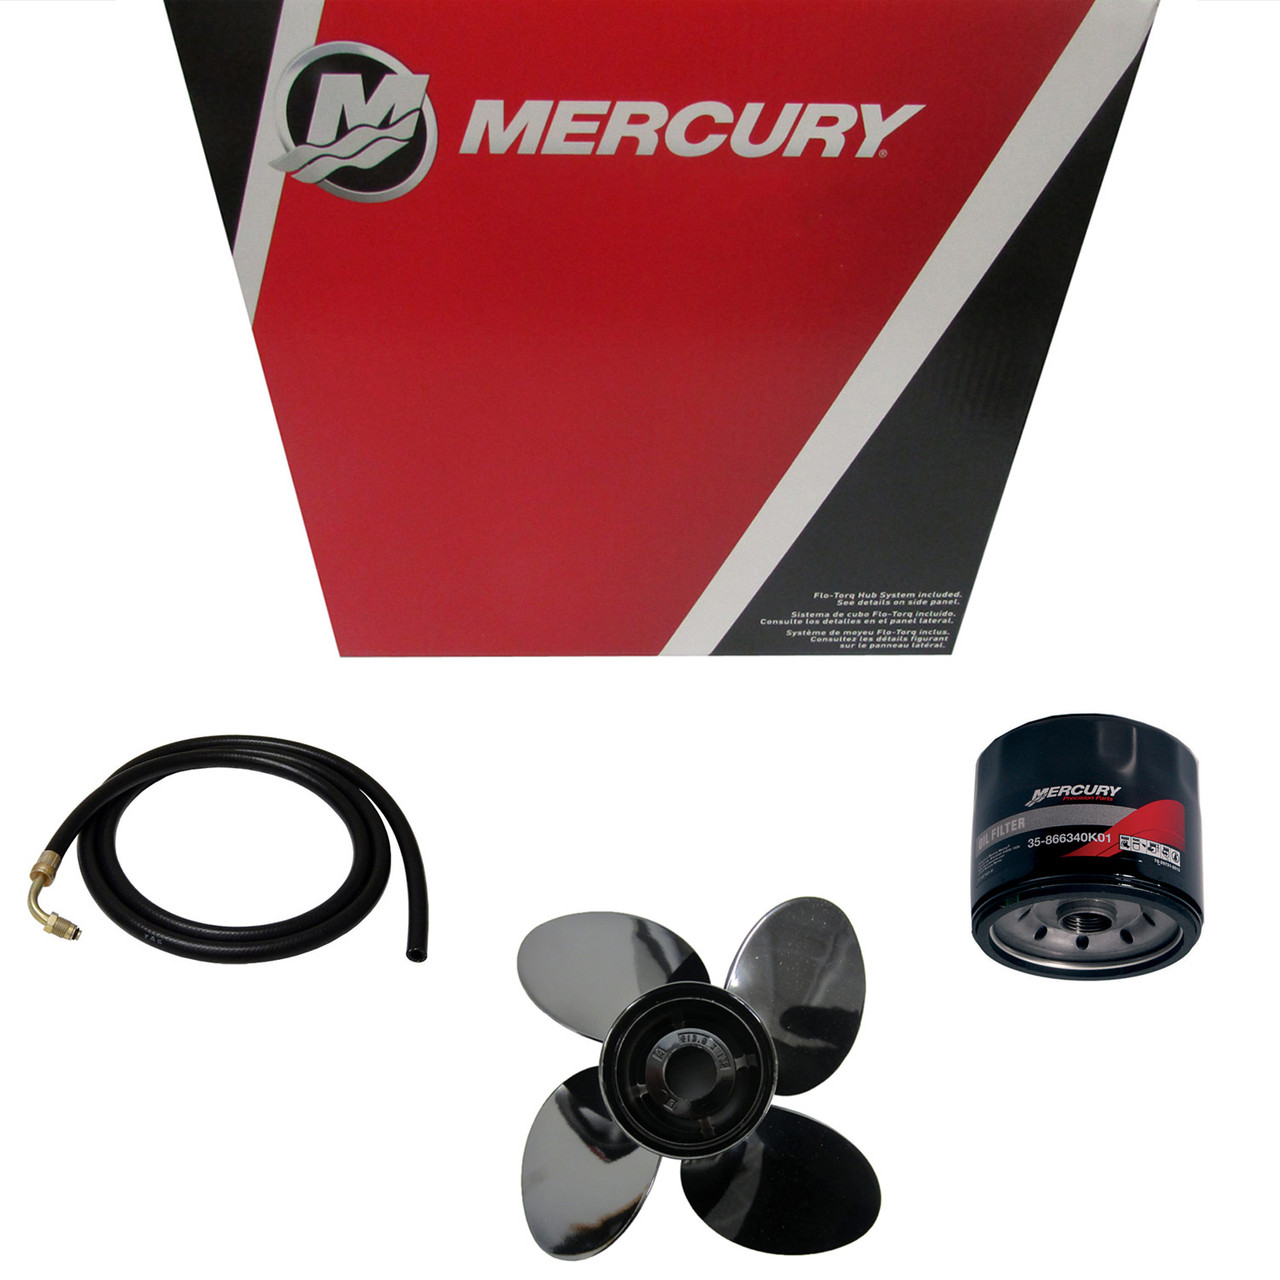 Mercury Marine / Mercruiser New OEM Hi-Perf Gear Lube, 92-858067Q01